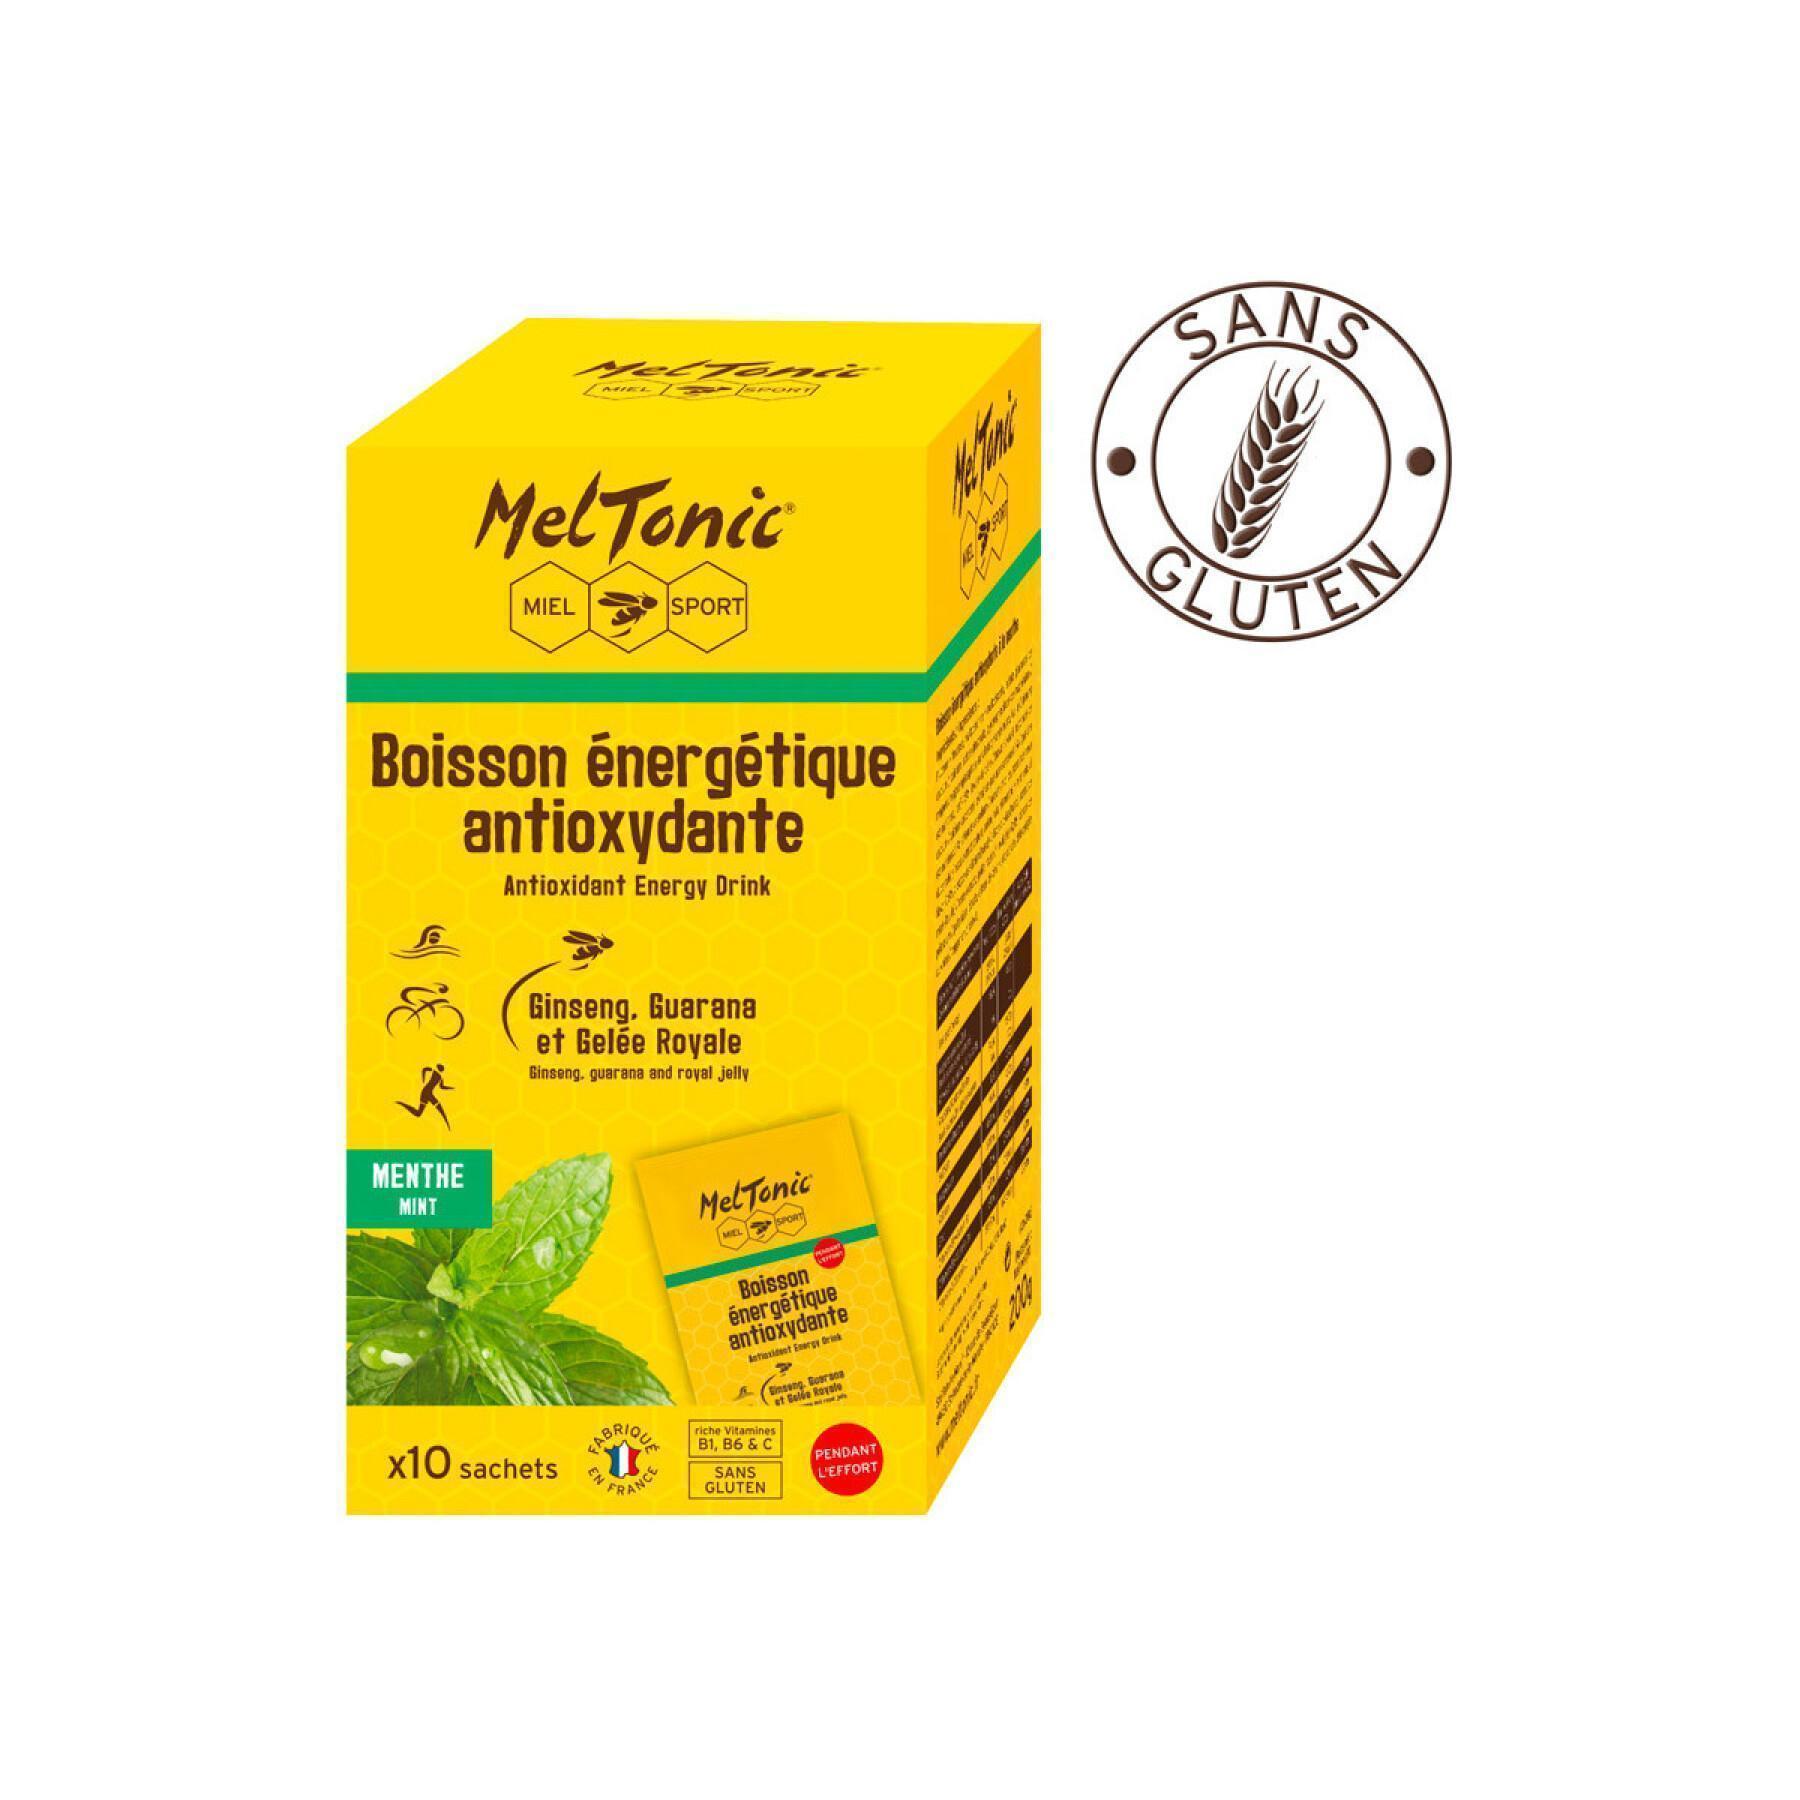 10 paket antioxidant energidryck Meltonic - Menthe